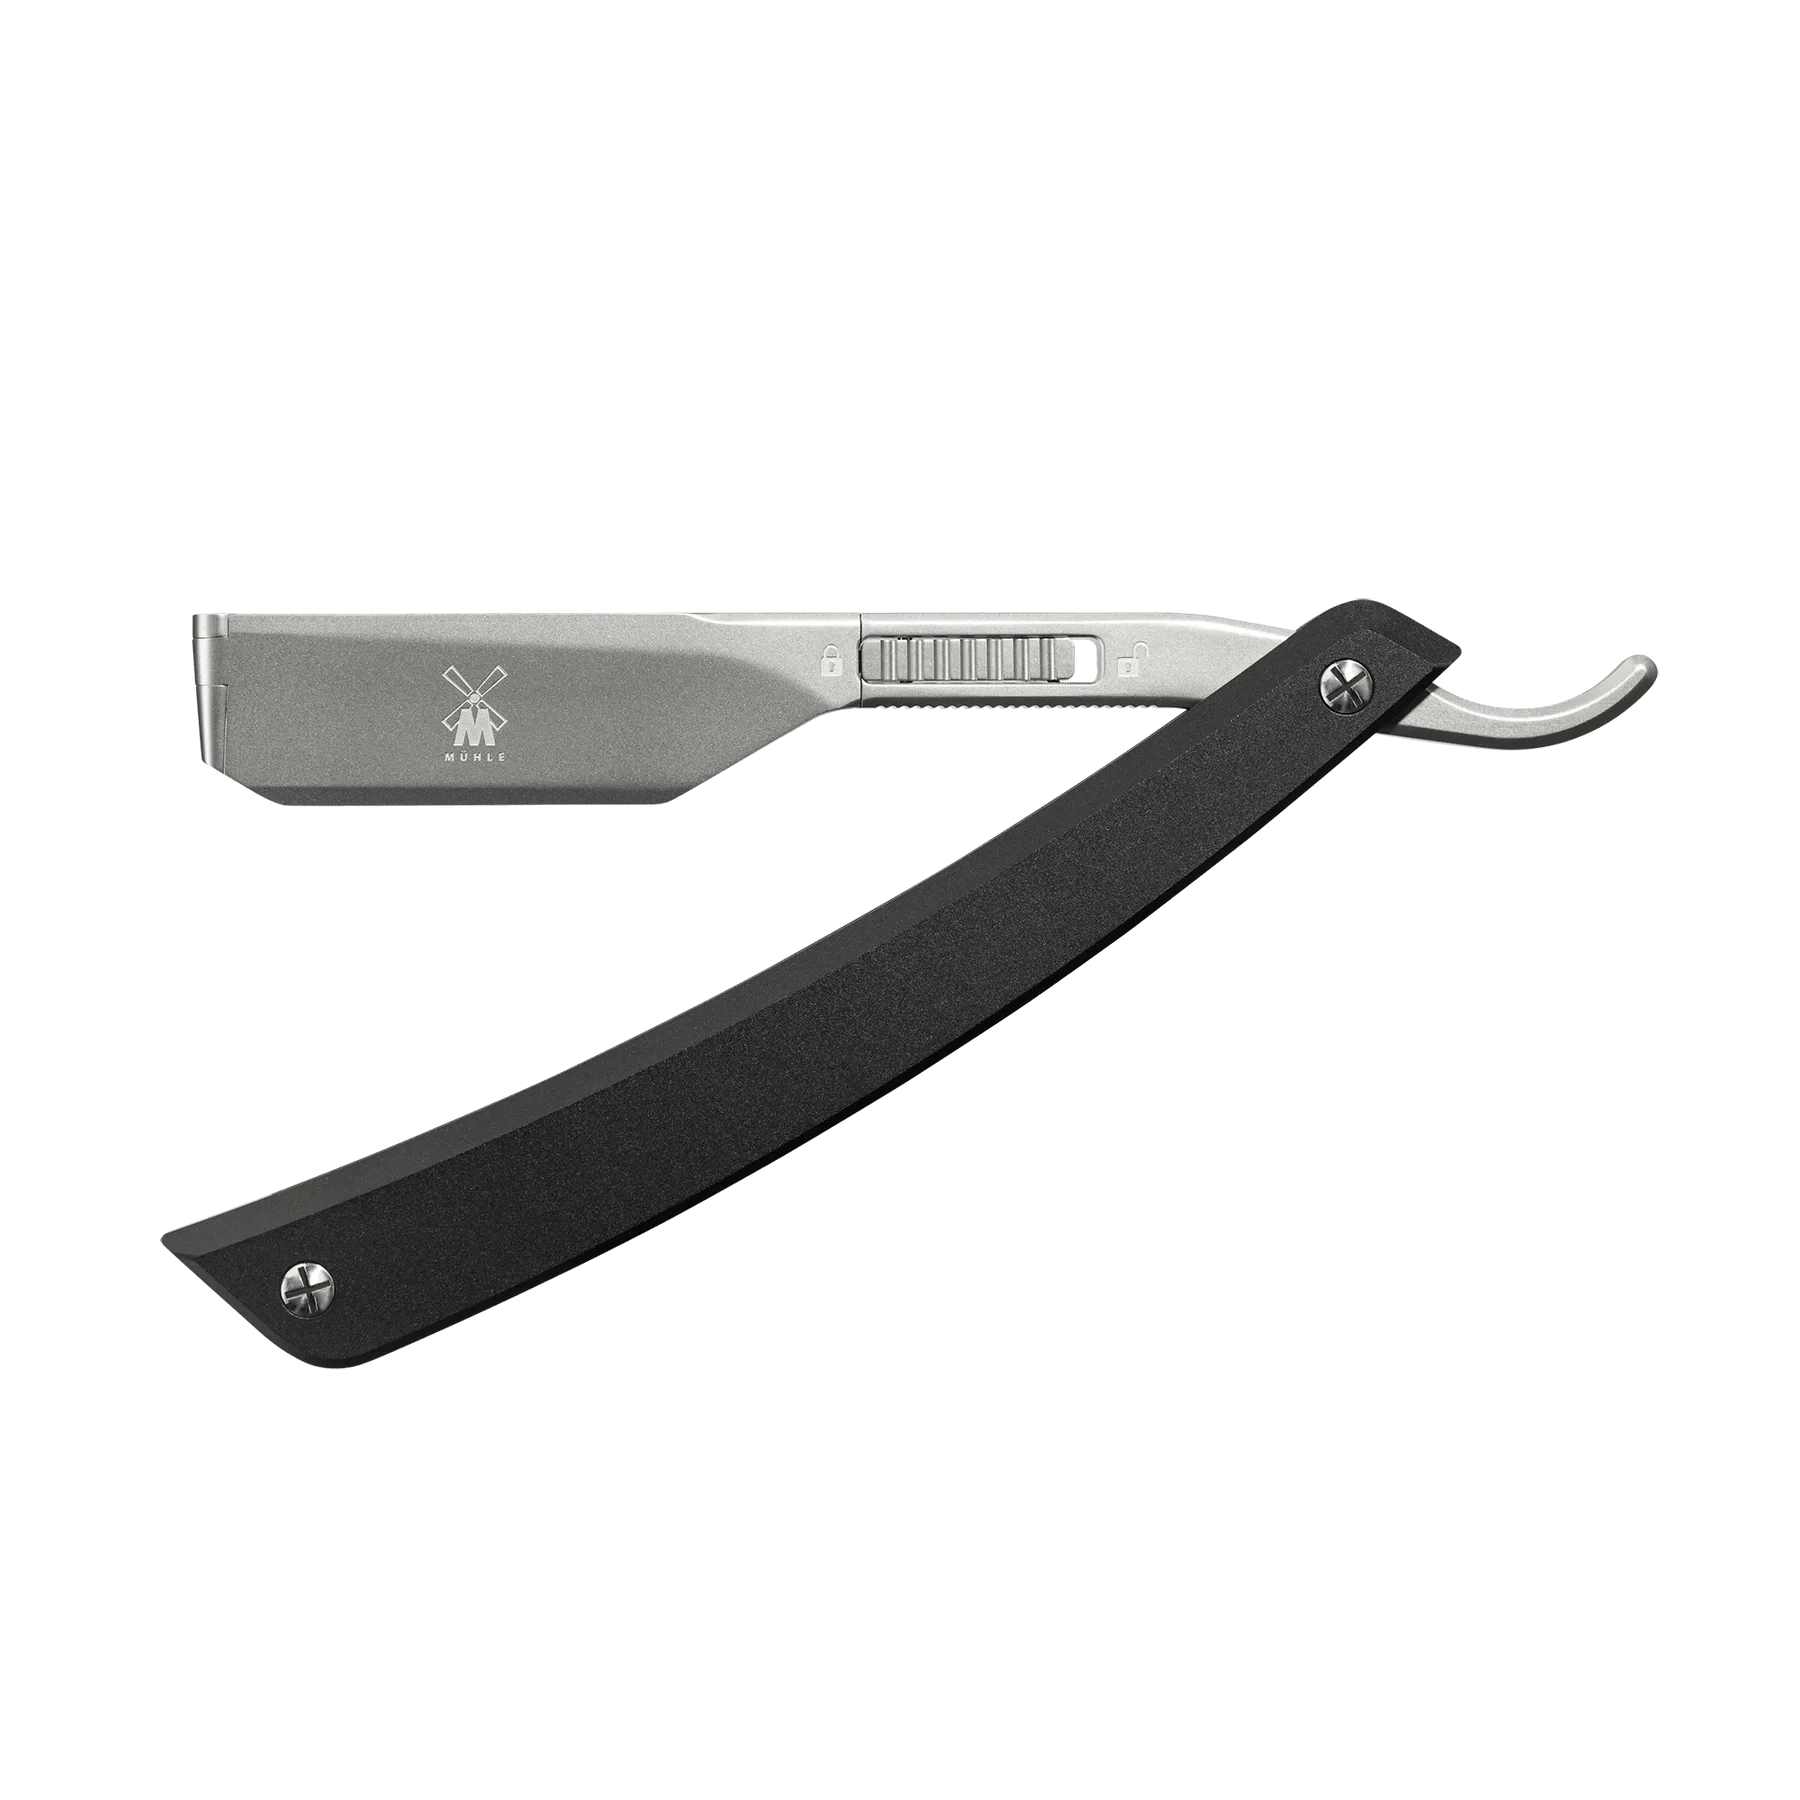 ENTHUSIAST - straight razor Mühle - razor for interchangeable blades, Black